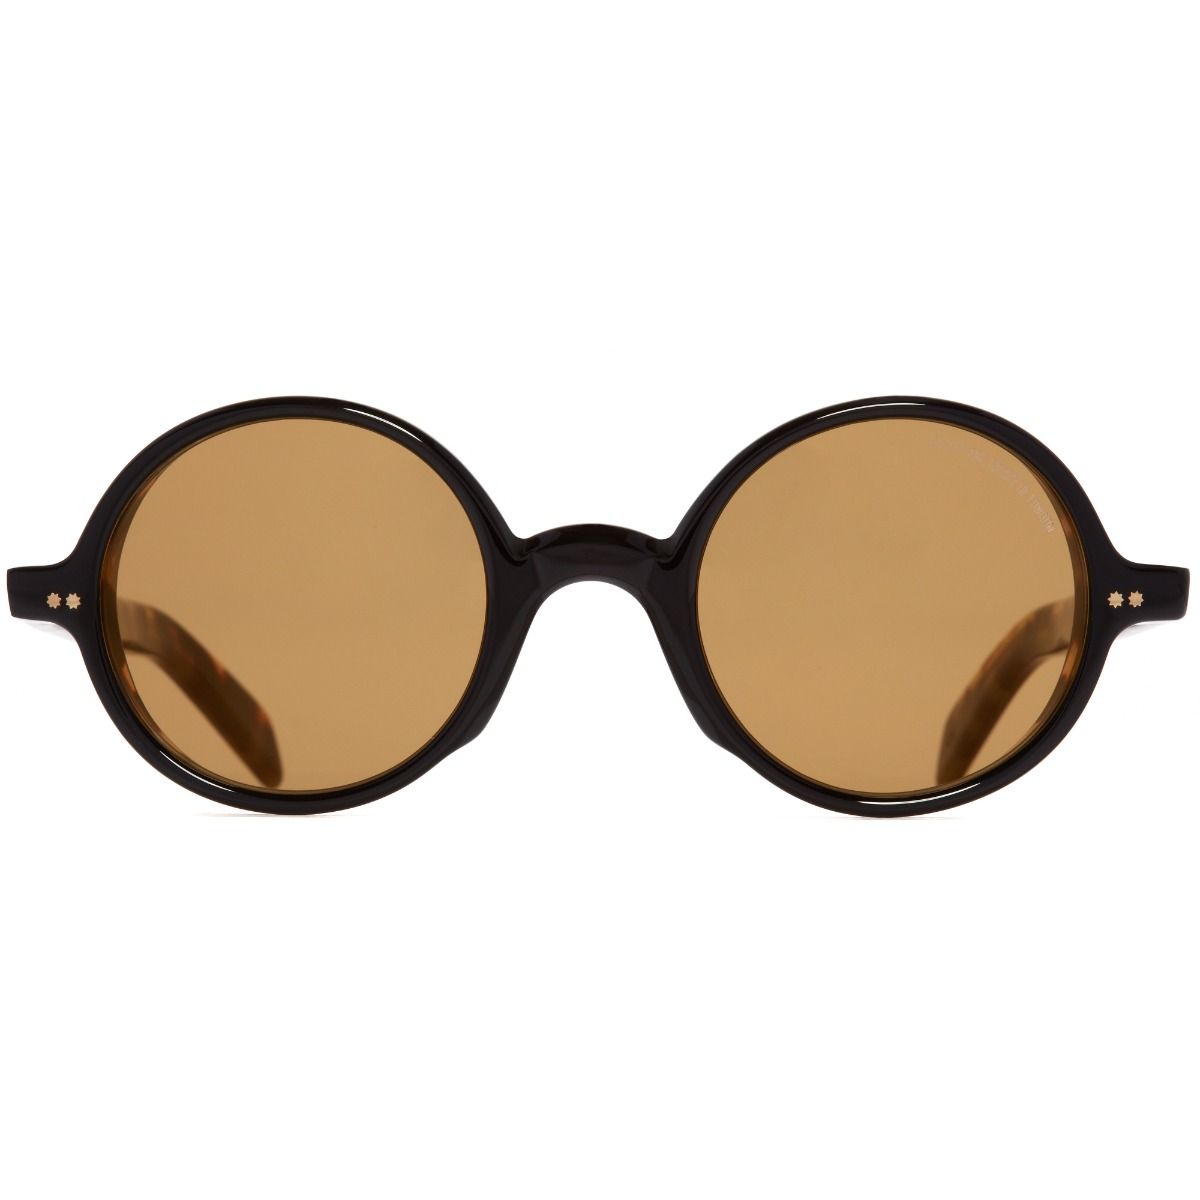 GR01 Round Sunglasses-Black on Camo